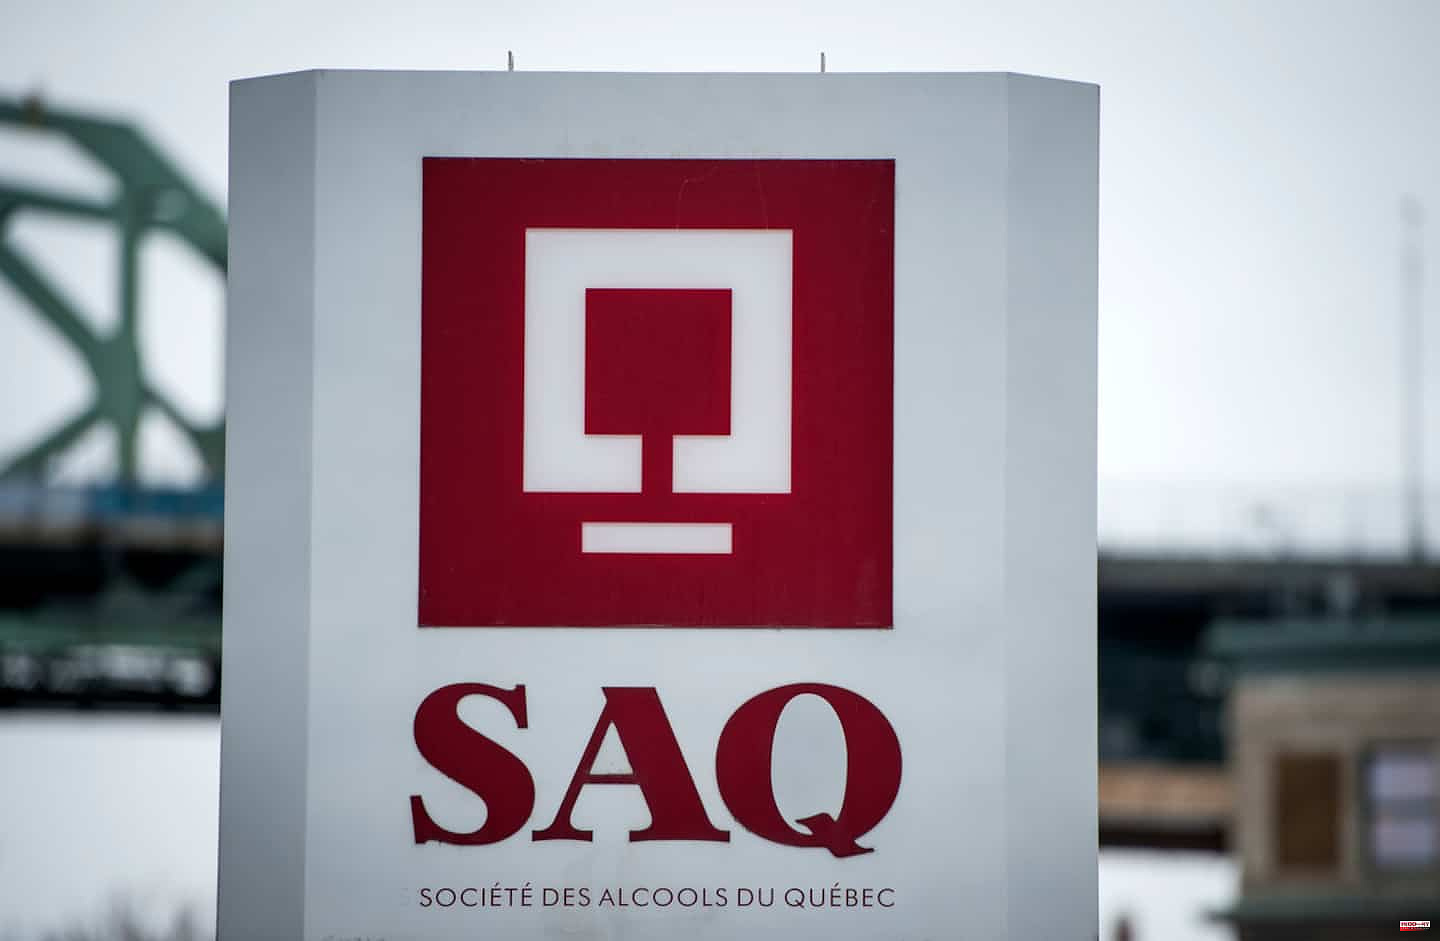 The union denounces the “Amazon” management of the SAQ